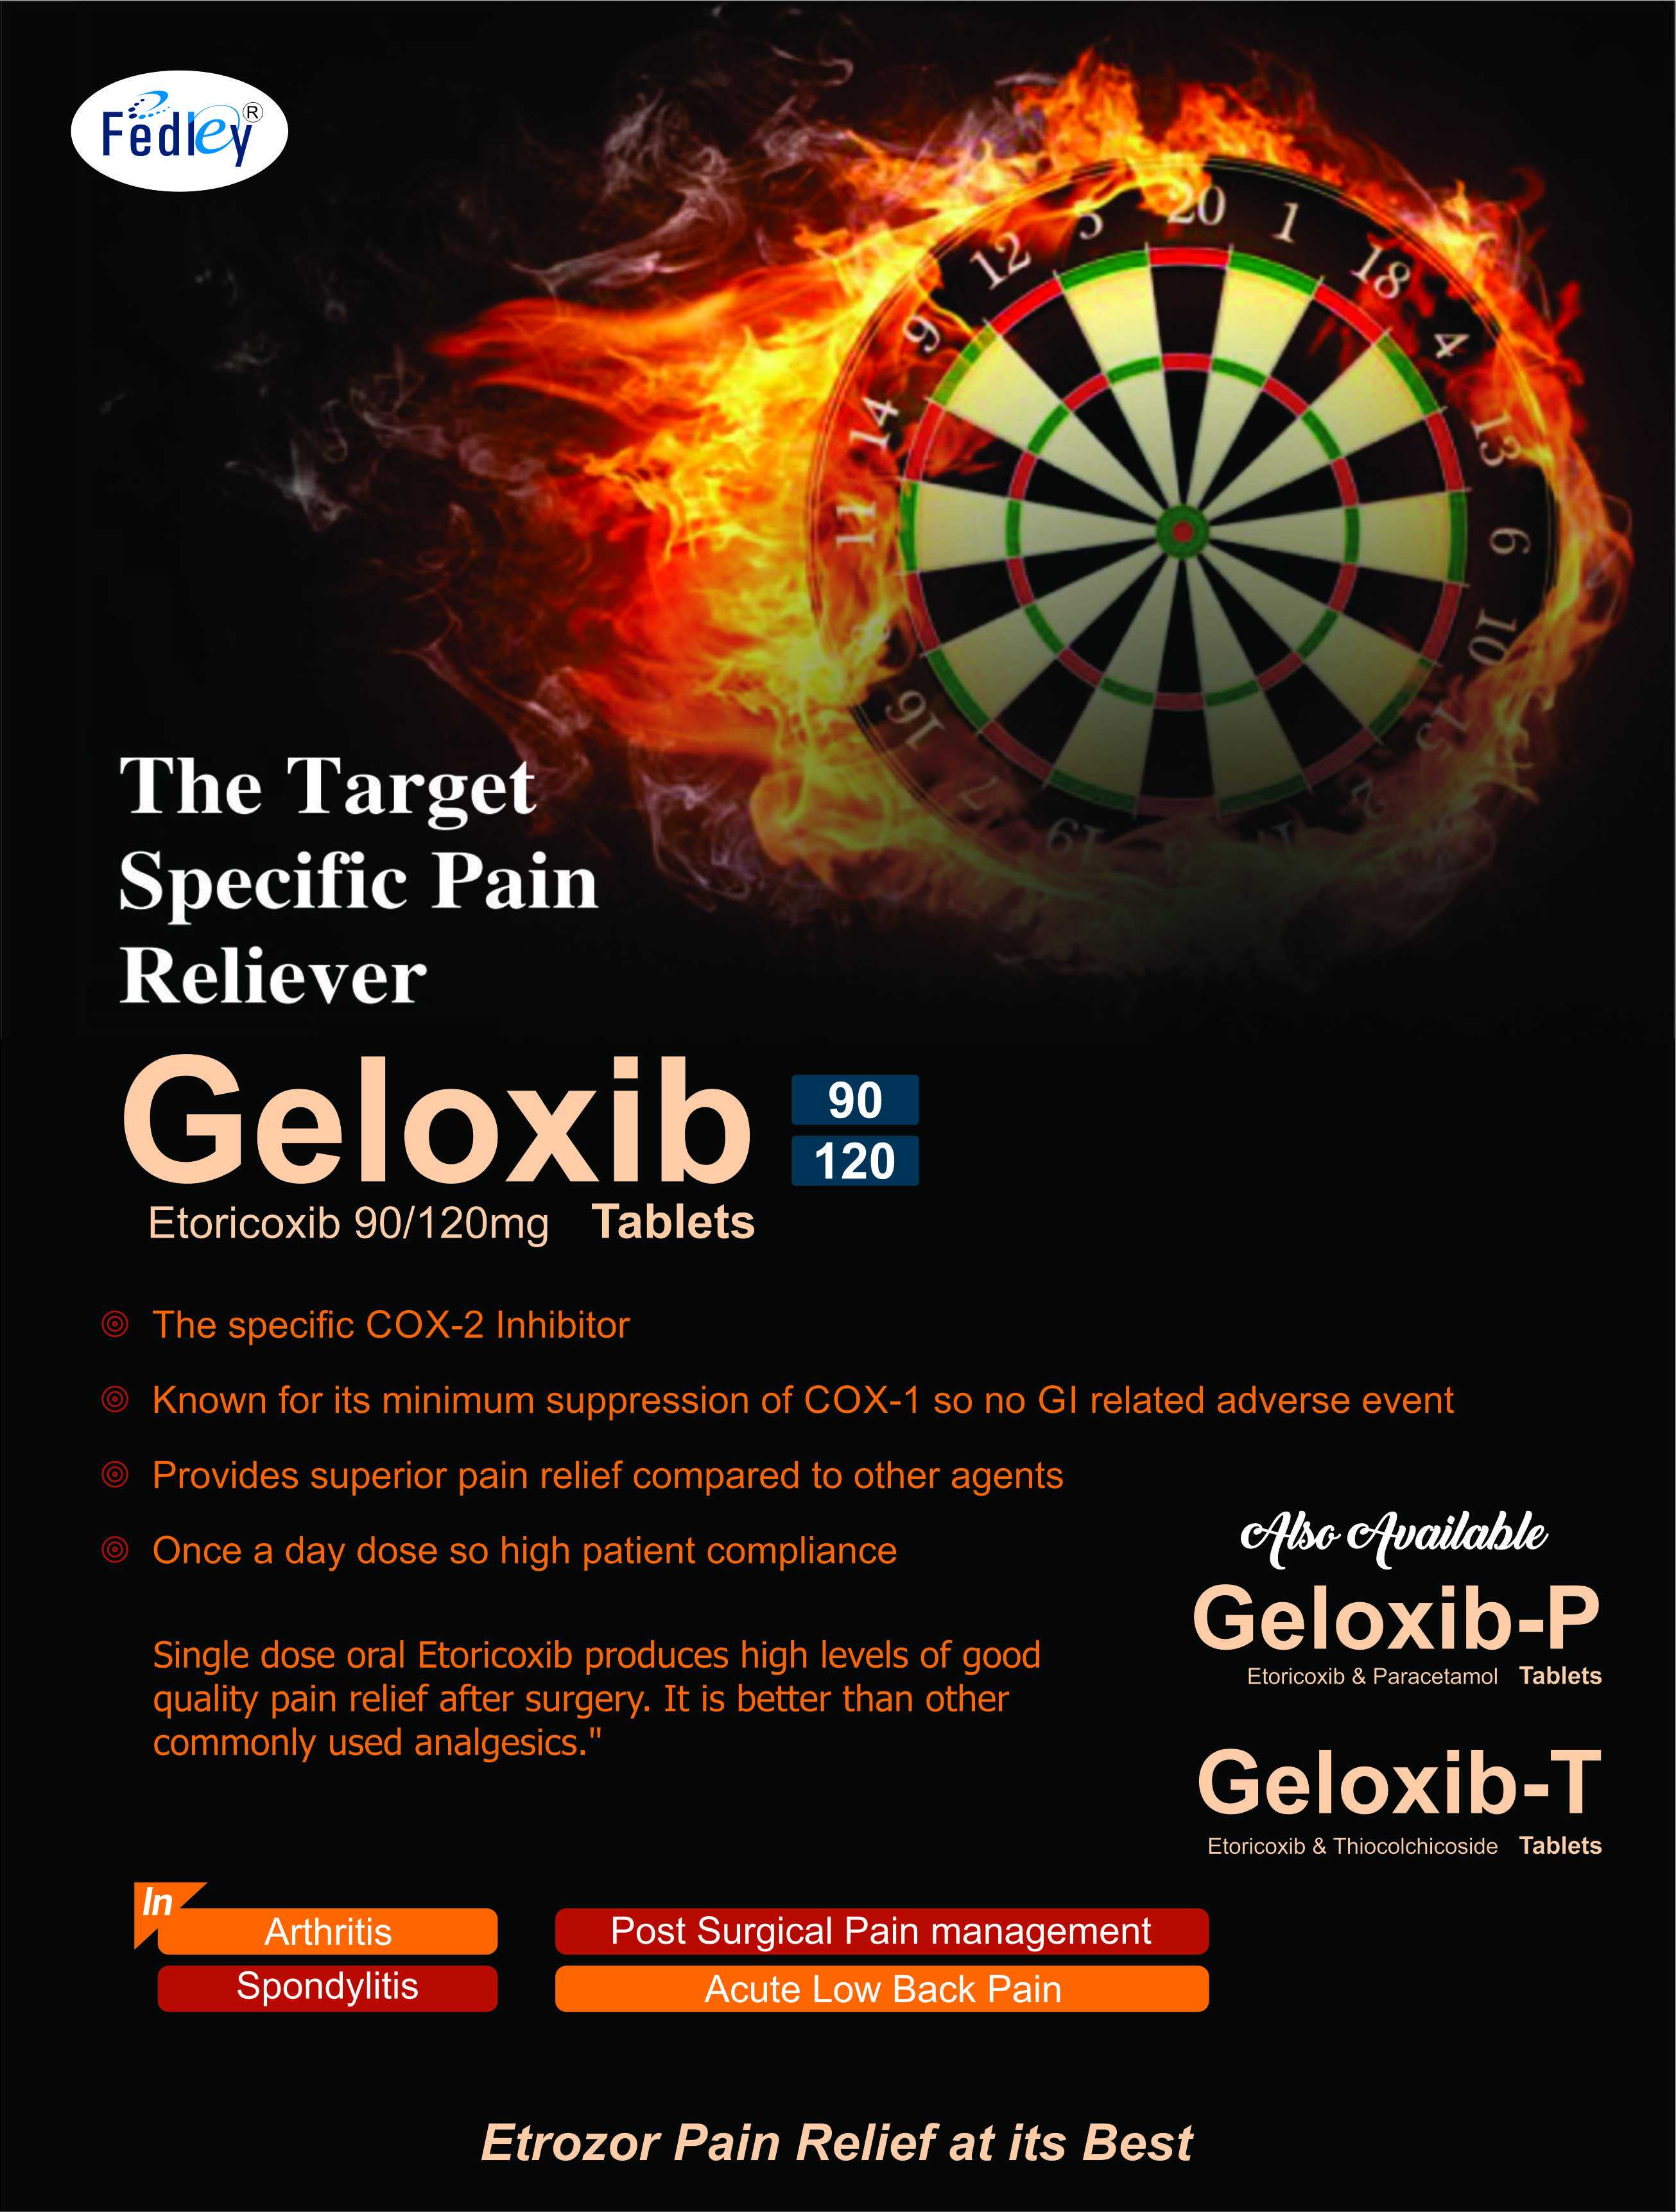 GELOXIB-P